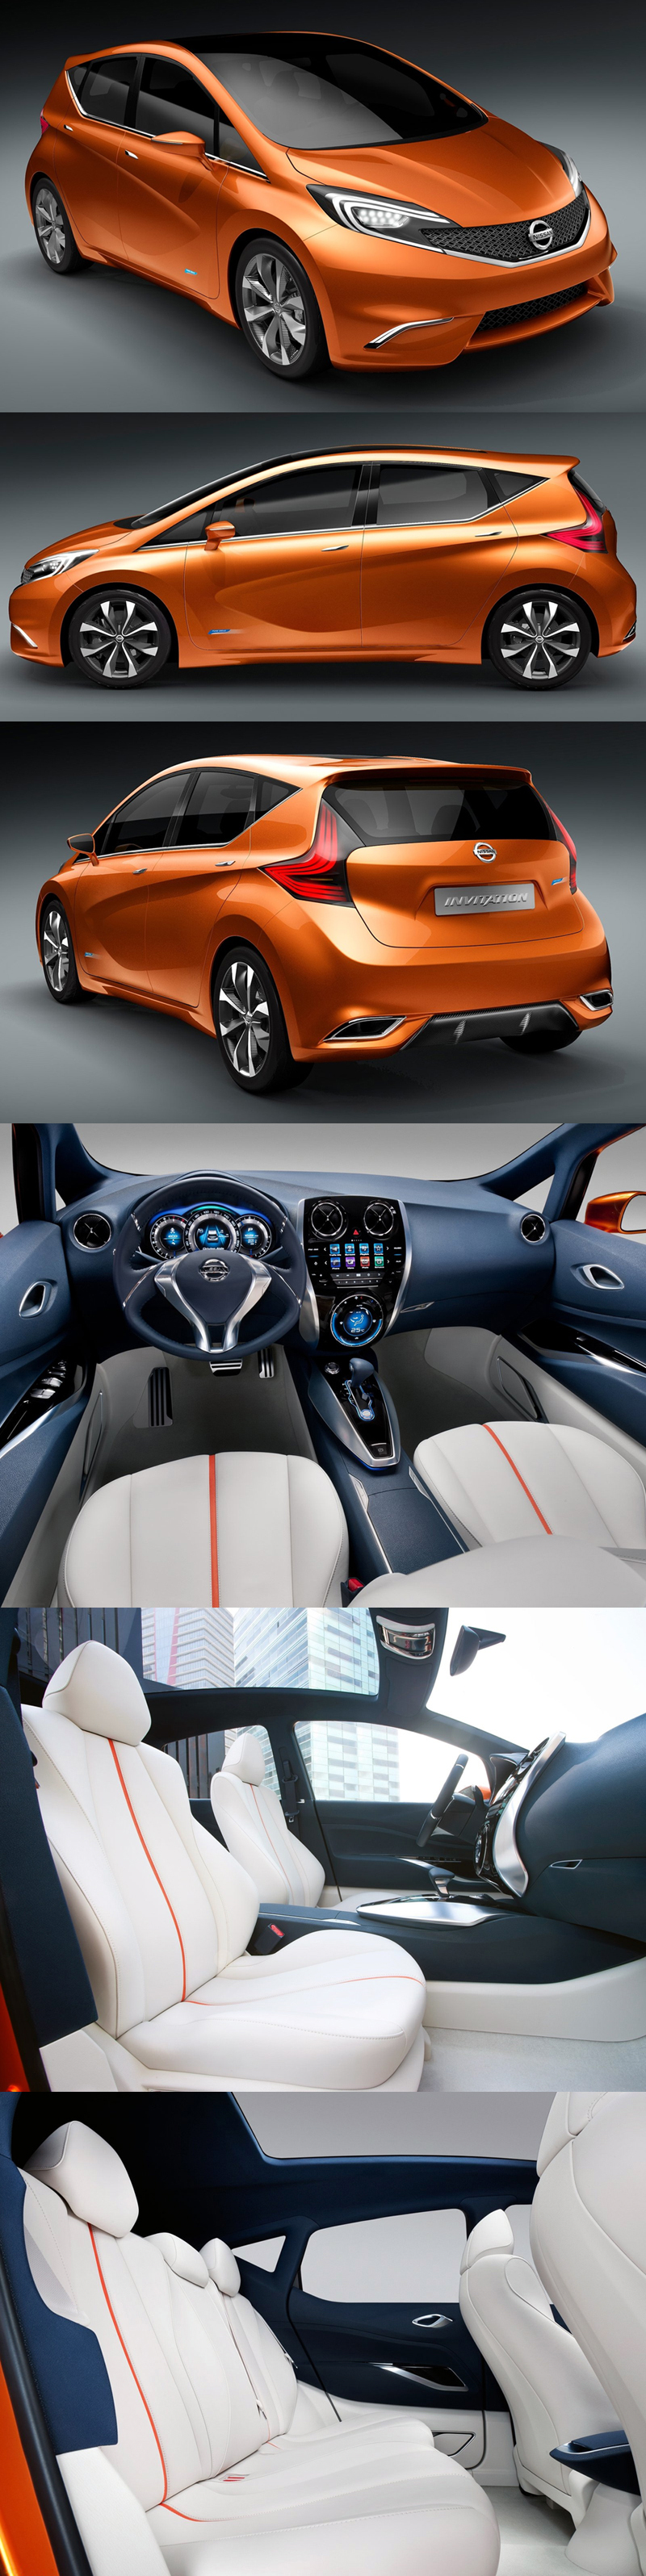 2012_Nissan_Invitation_Concept_Car